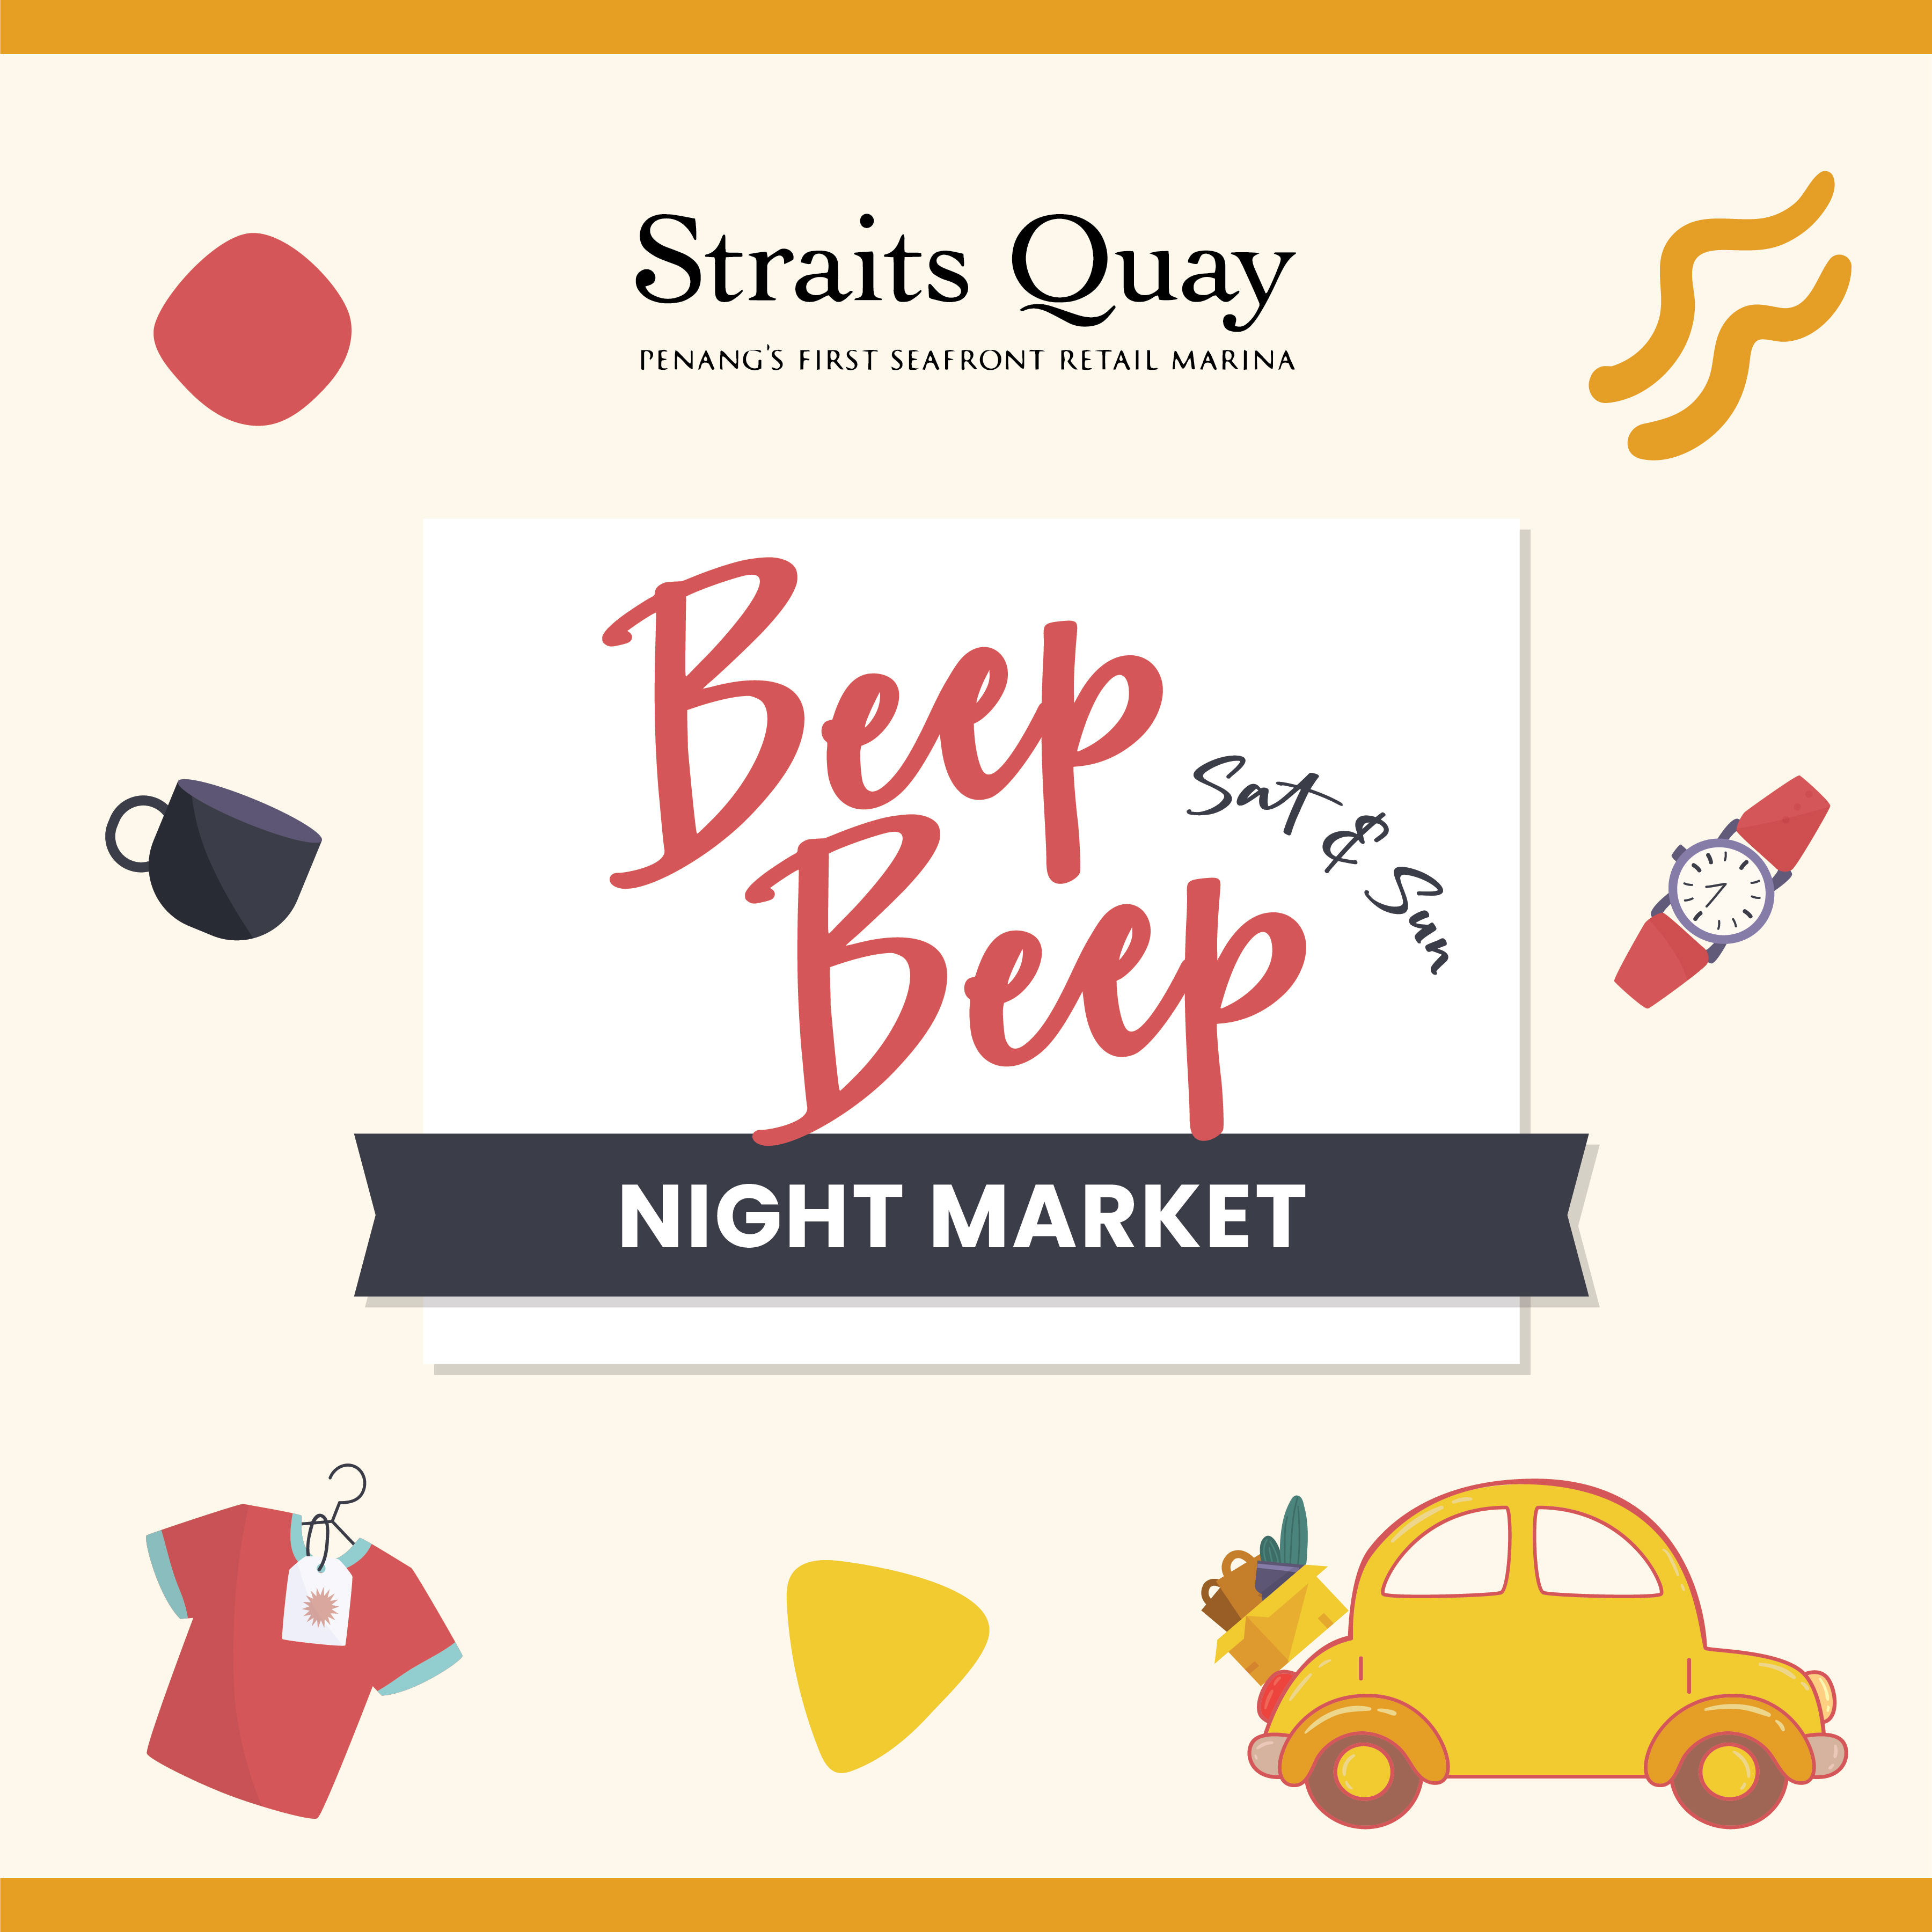 Beep beep night market social media 02-01